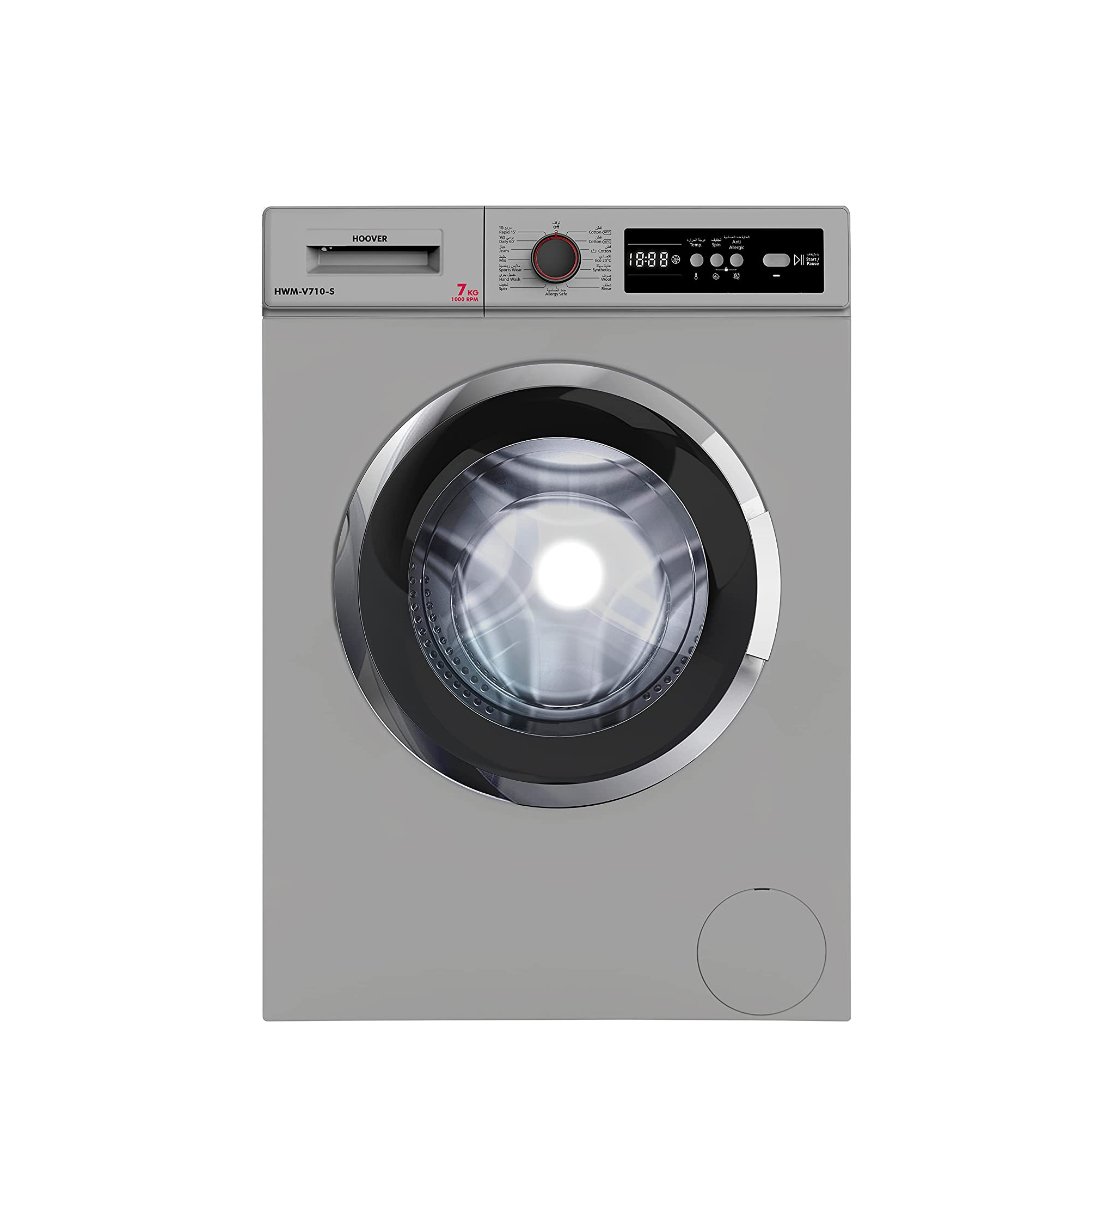 Hoover 7Kg Front Load Washing Machine Silver Model HWMV710S | 1 Year Warranty